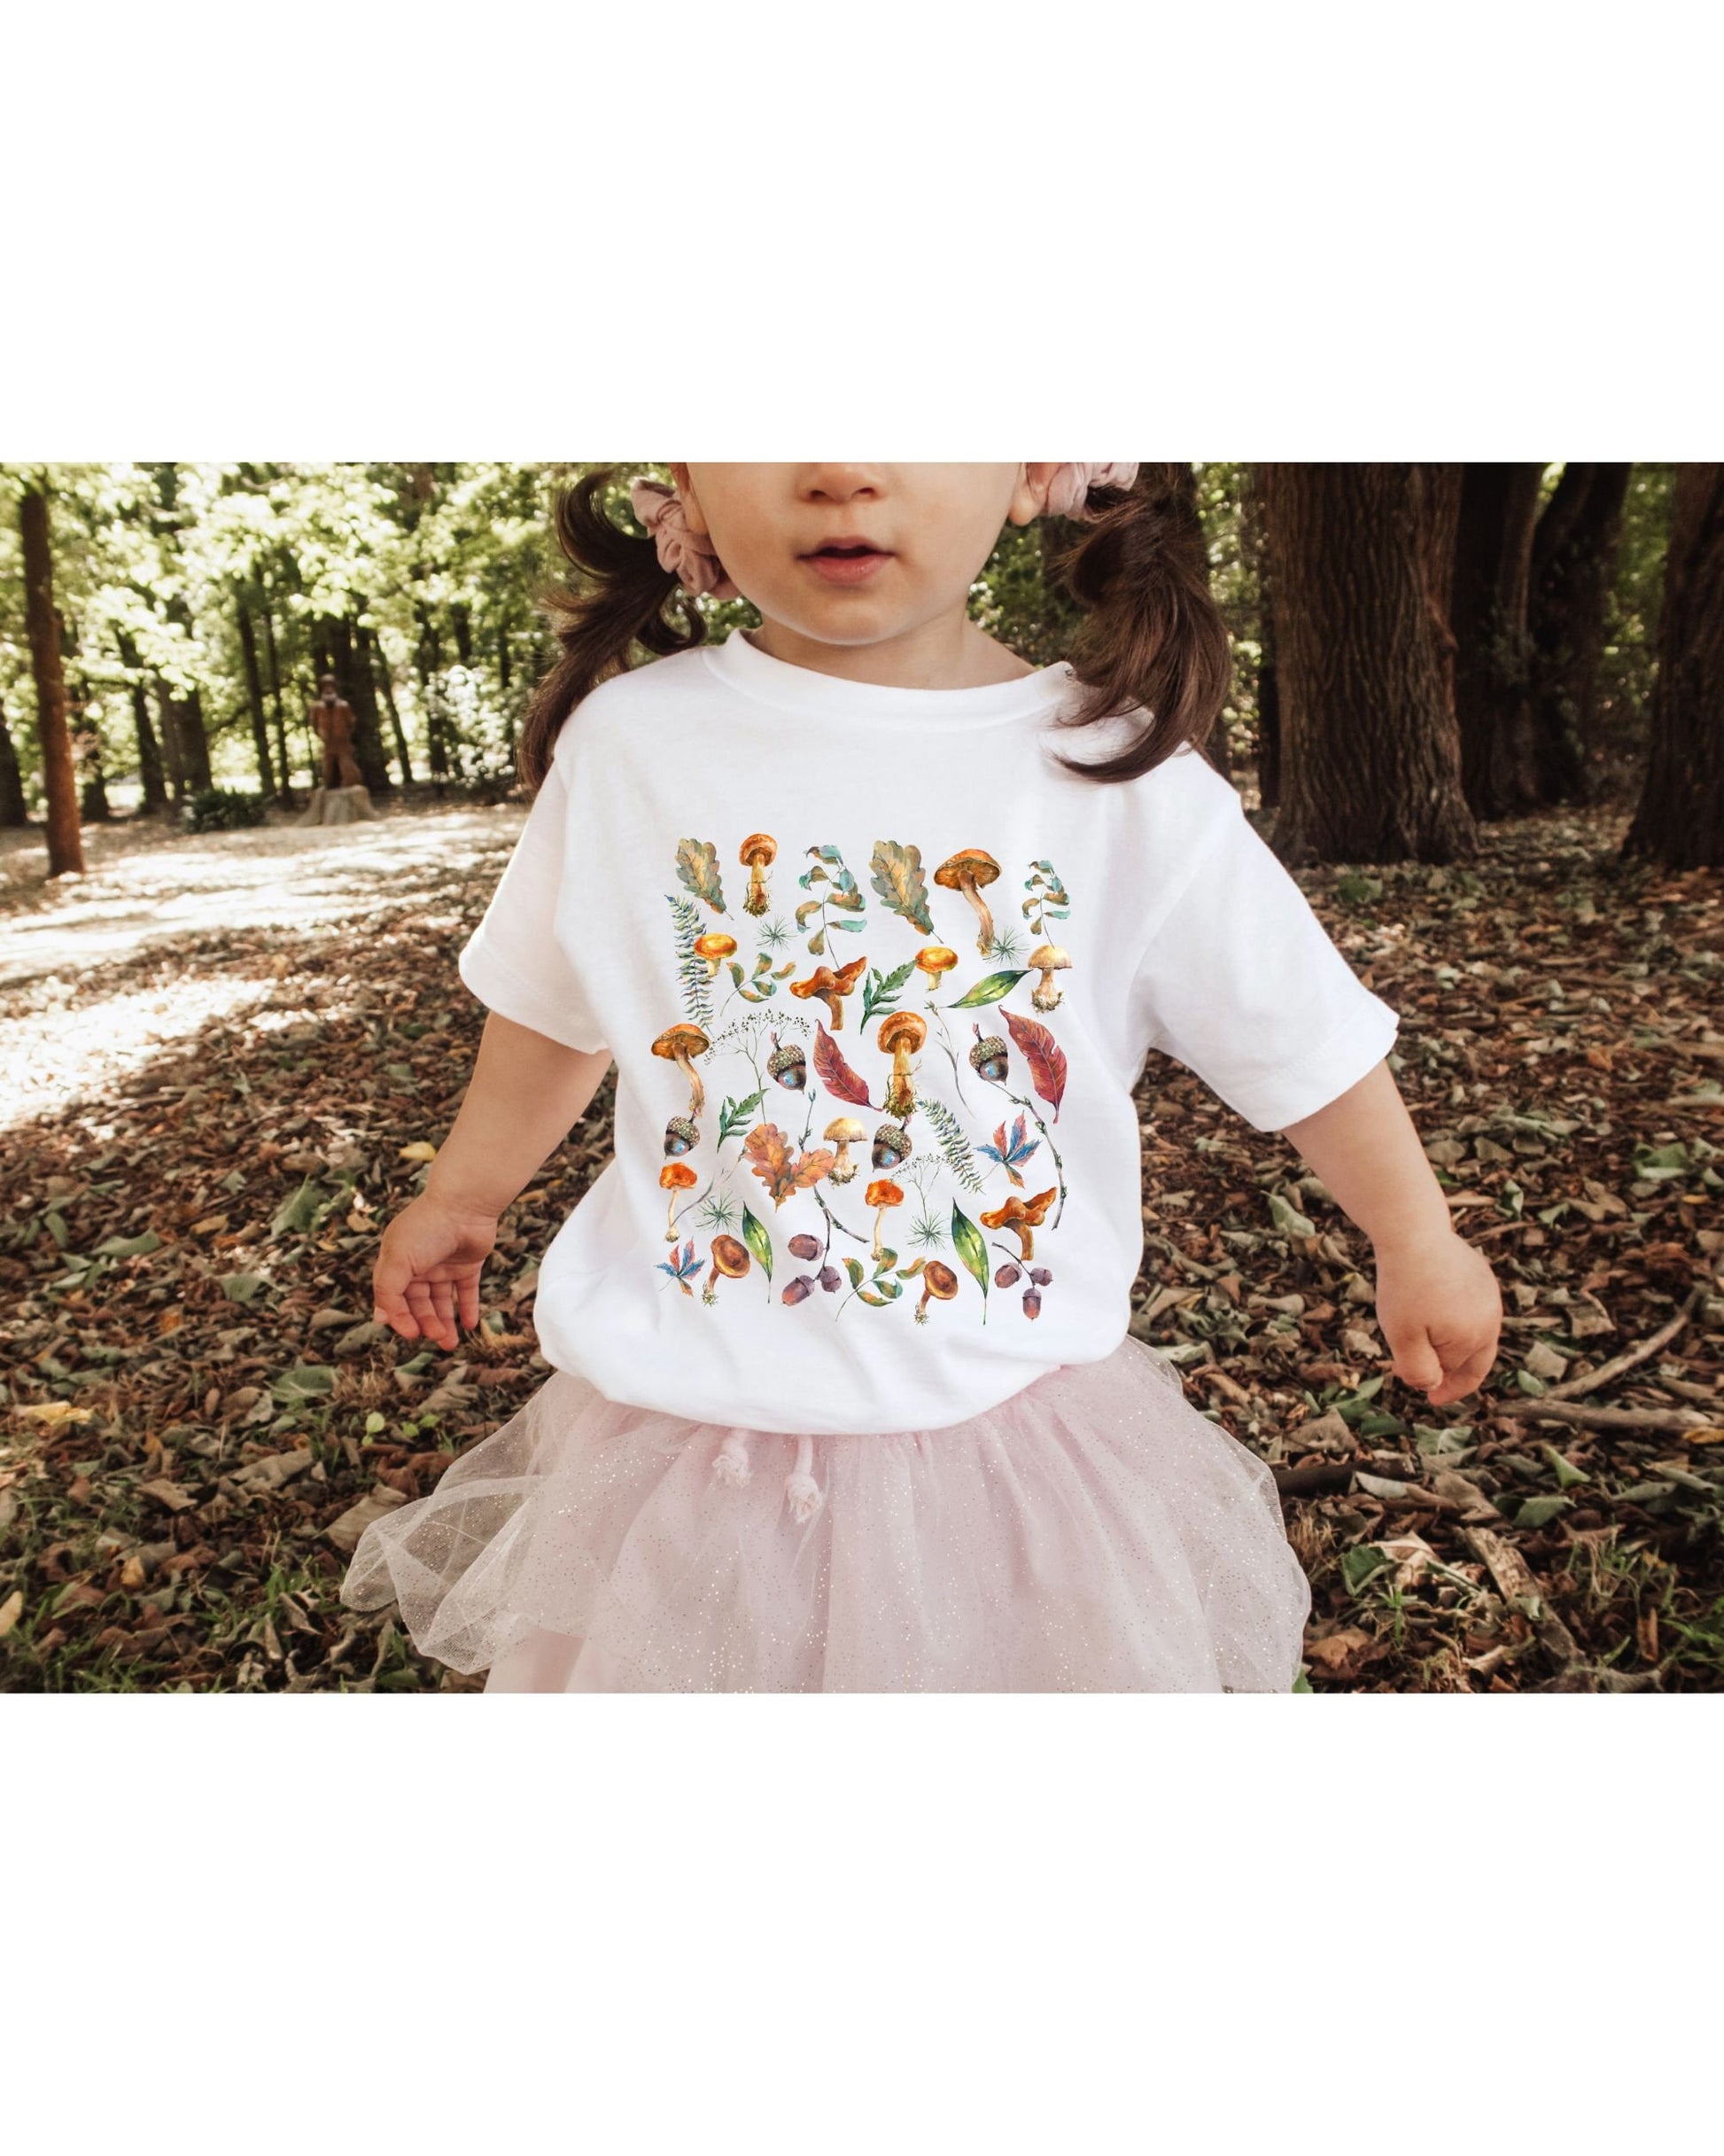 Mushroom Shirt Kids Autumn T-shirts for Toddler Boys Mushroom Shirt Cottagecore Kids Clothes BOHO Girls Tee Gender Neutral Fall Kids Shirt